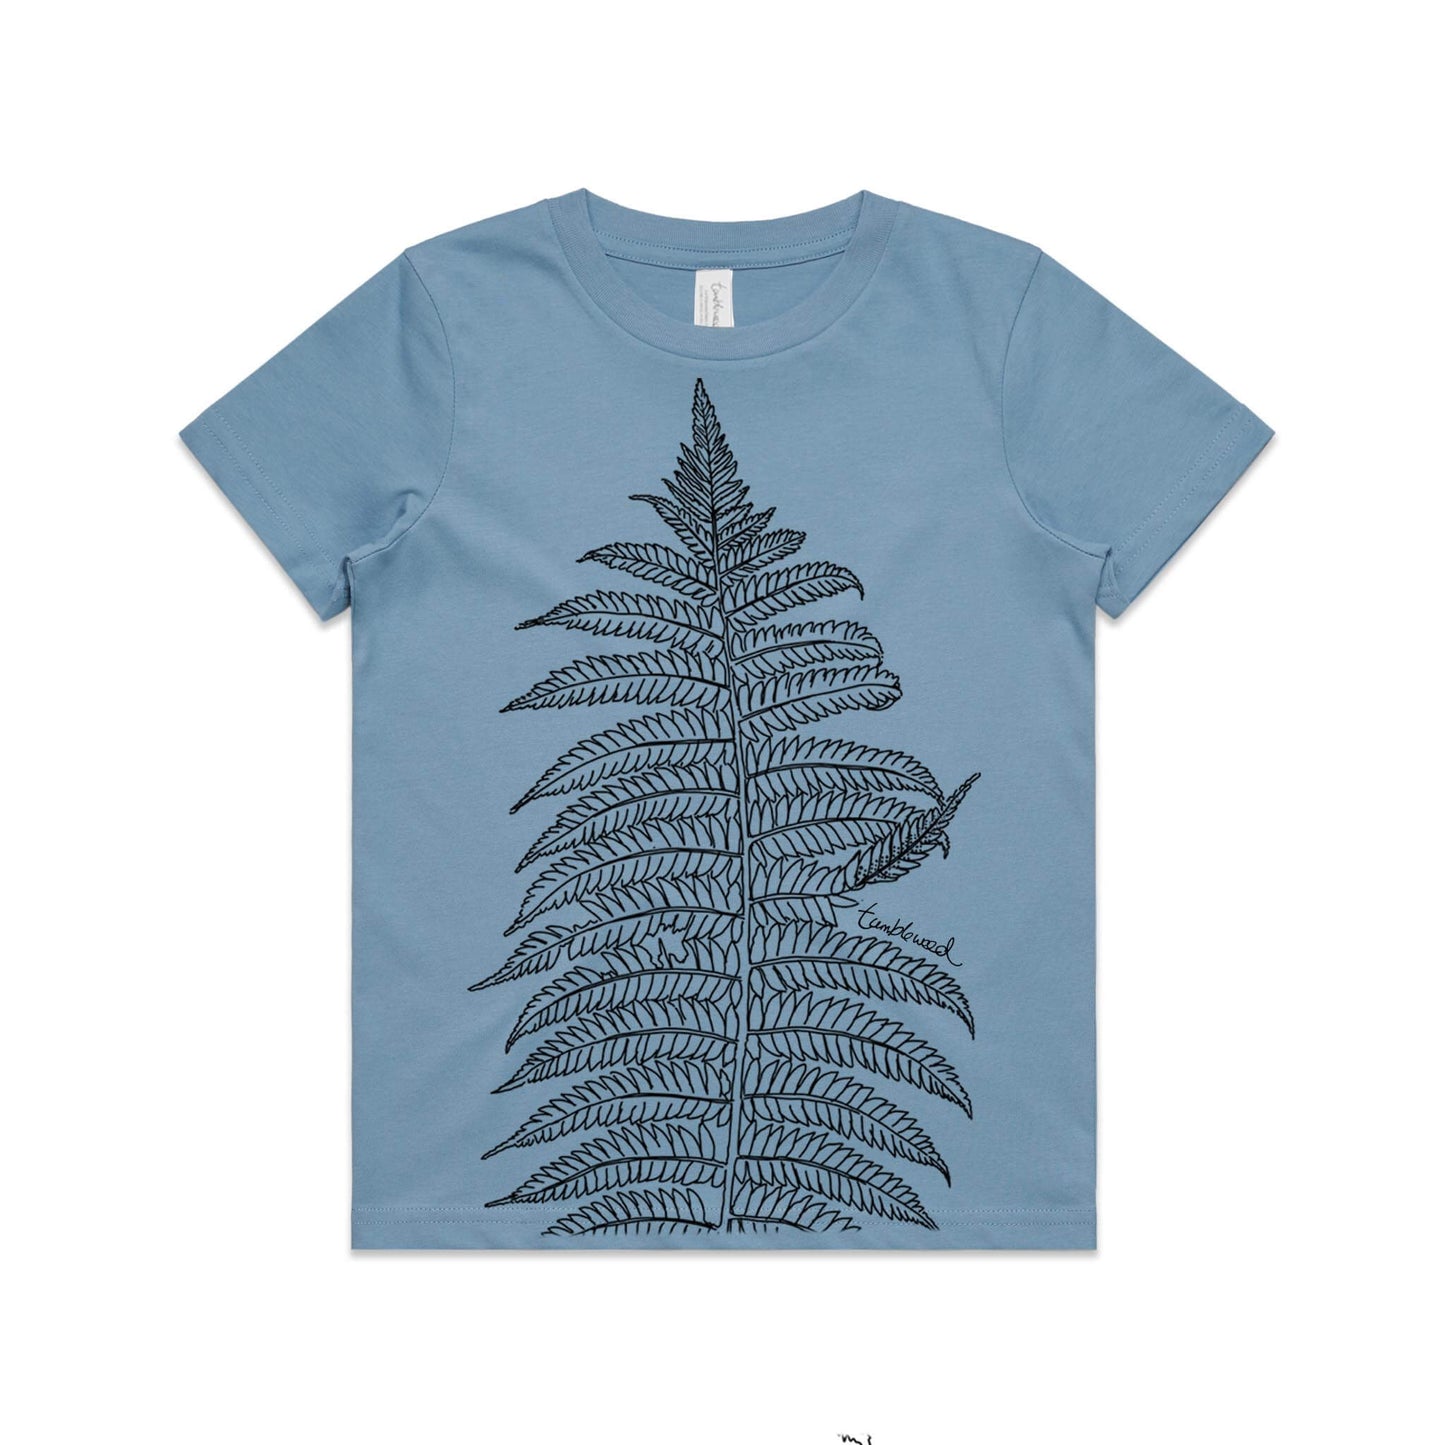 Silver fern/ponga Kids’ T-shirt